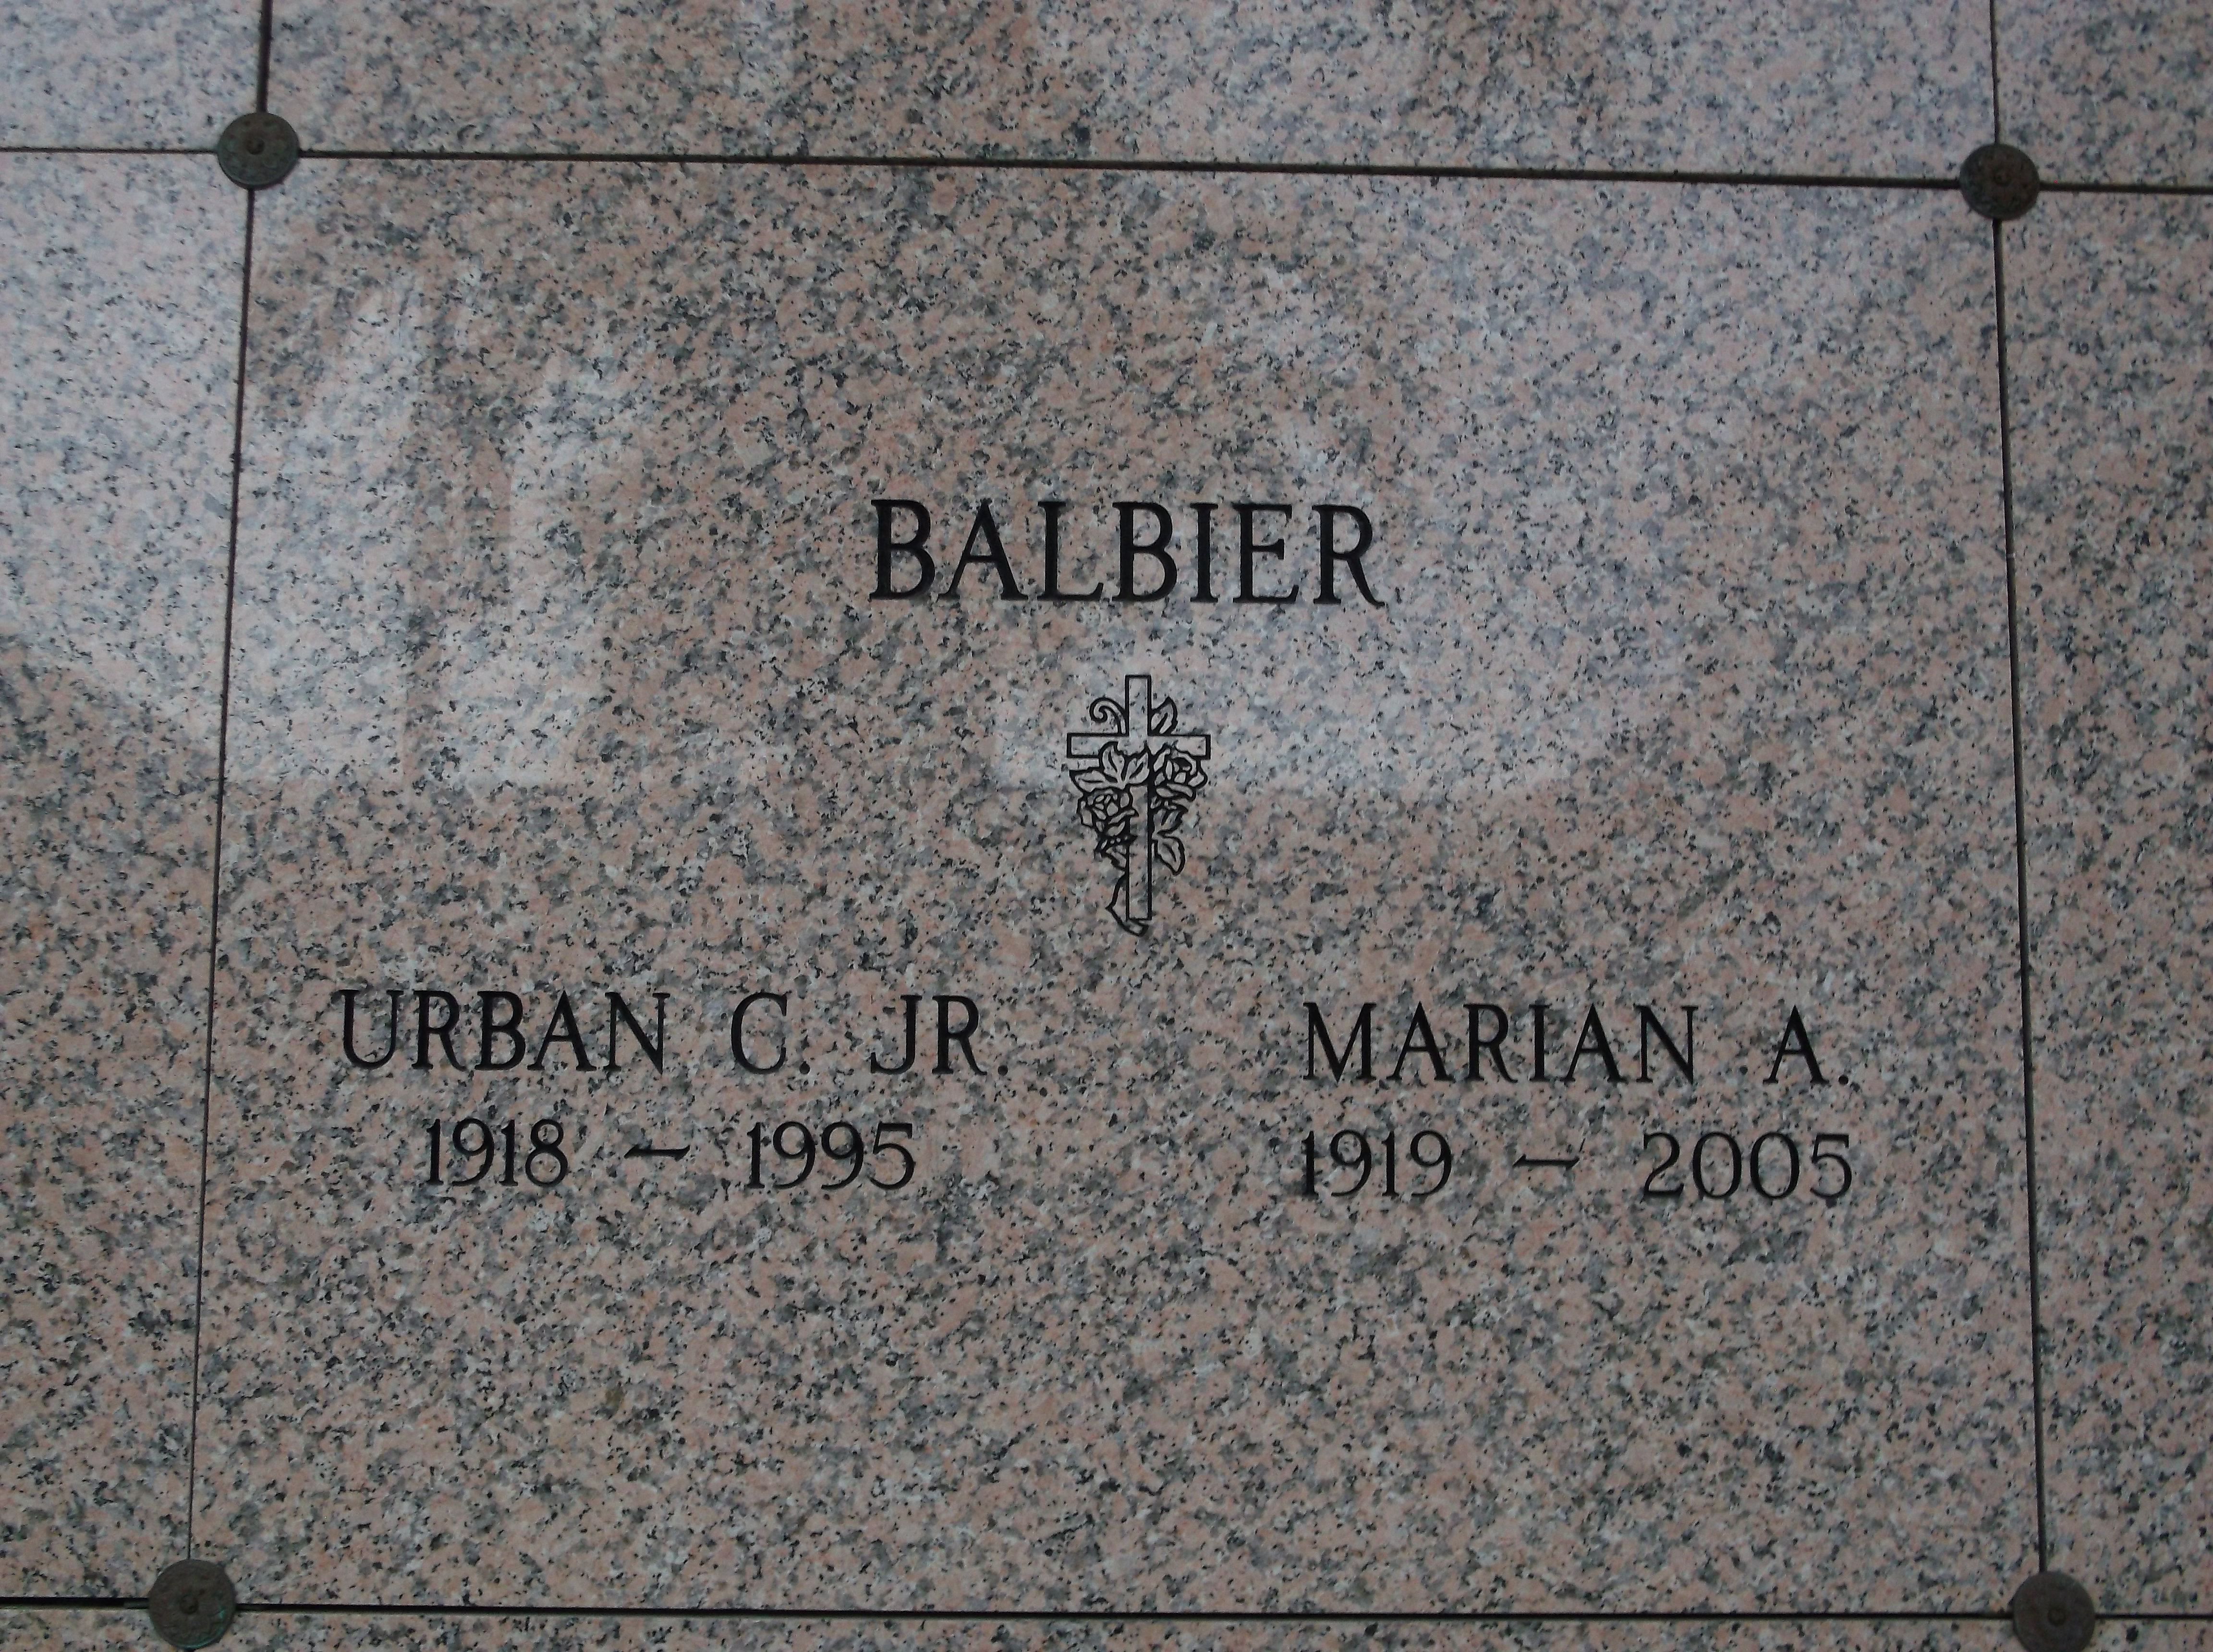 Urban C Balbier, Jr